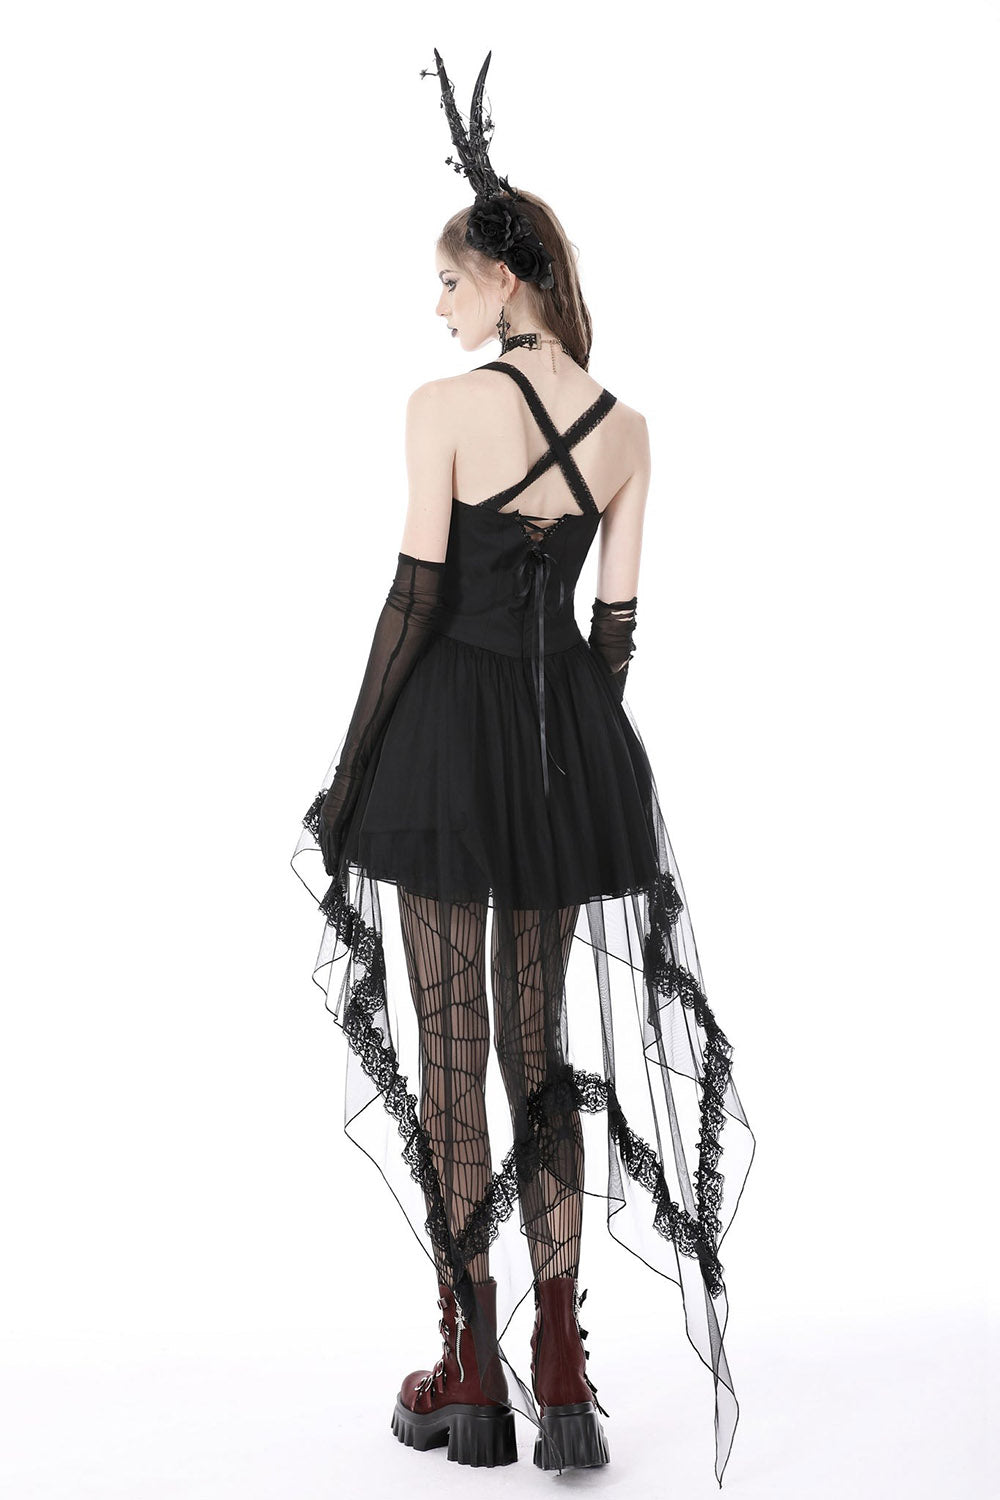 BACKORDER - Morise Overlay Lace Dress